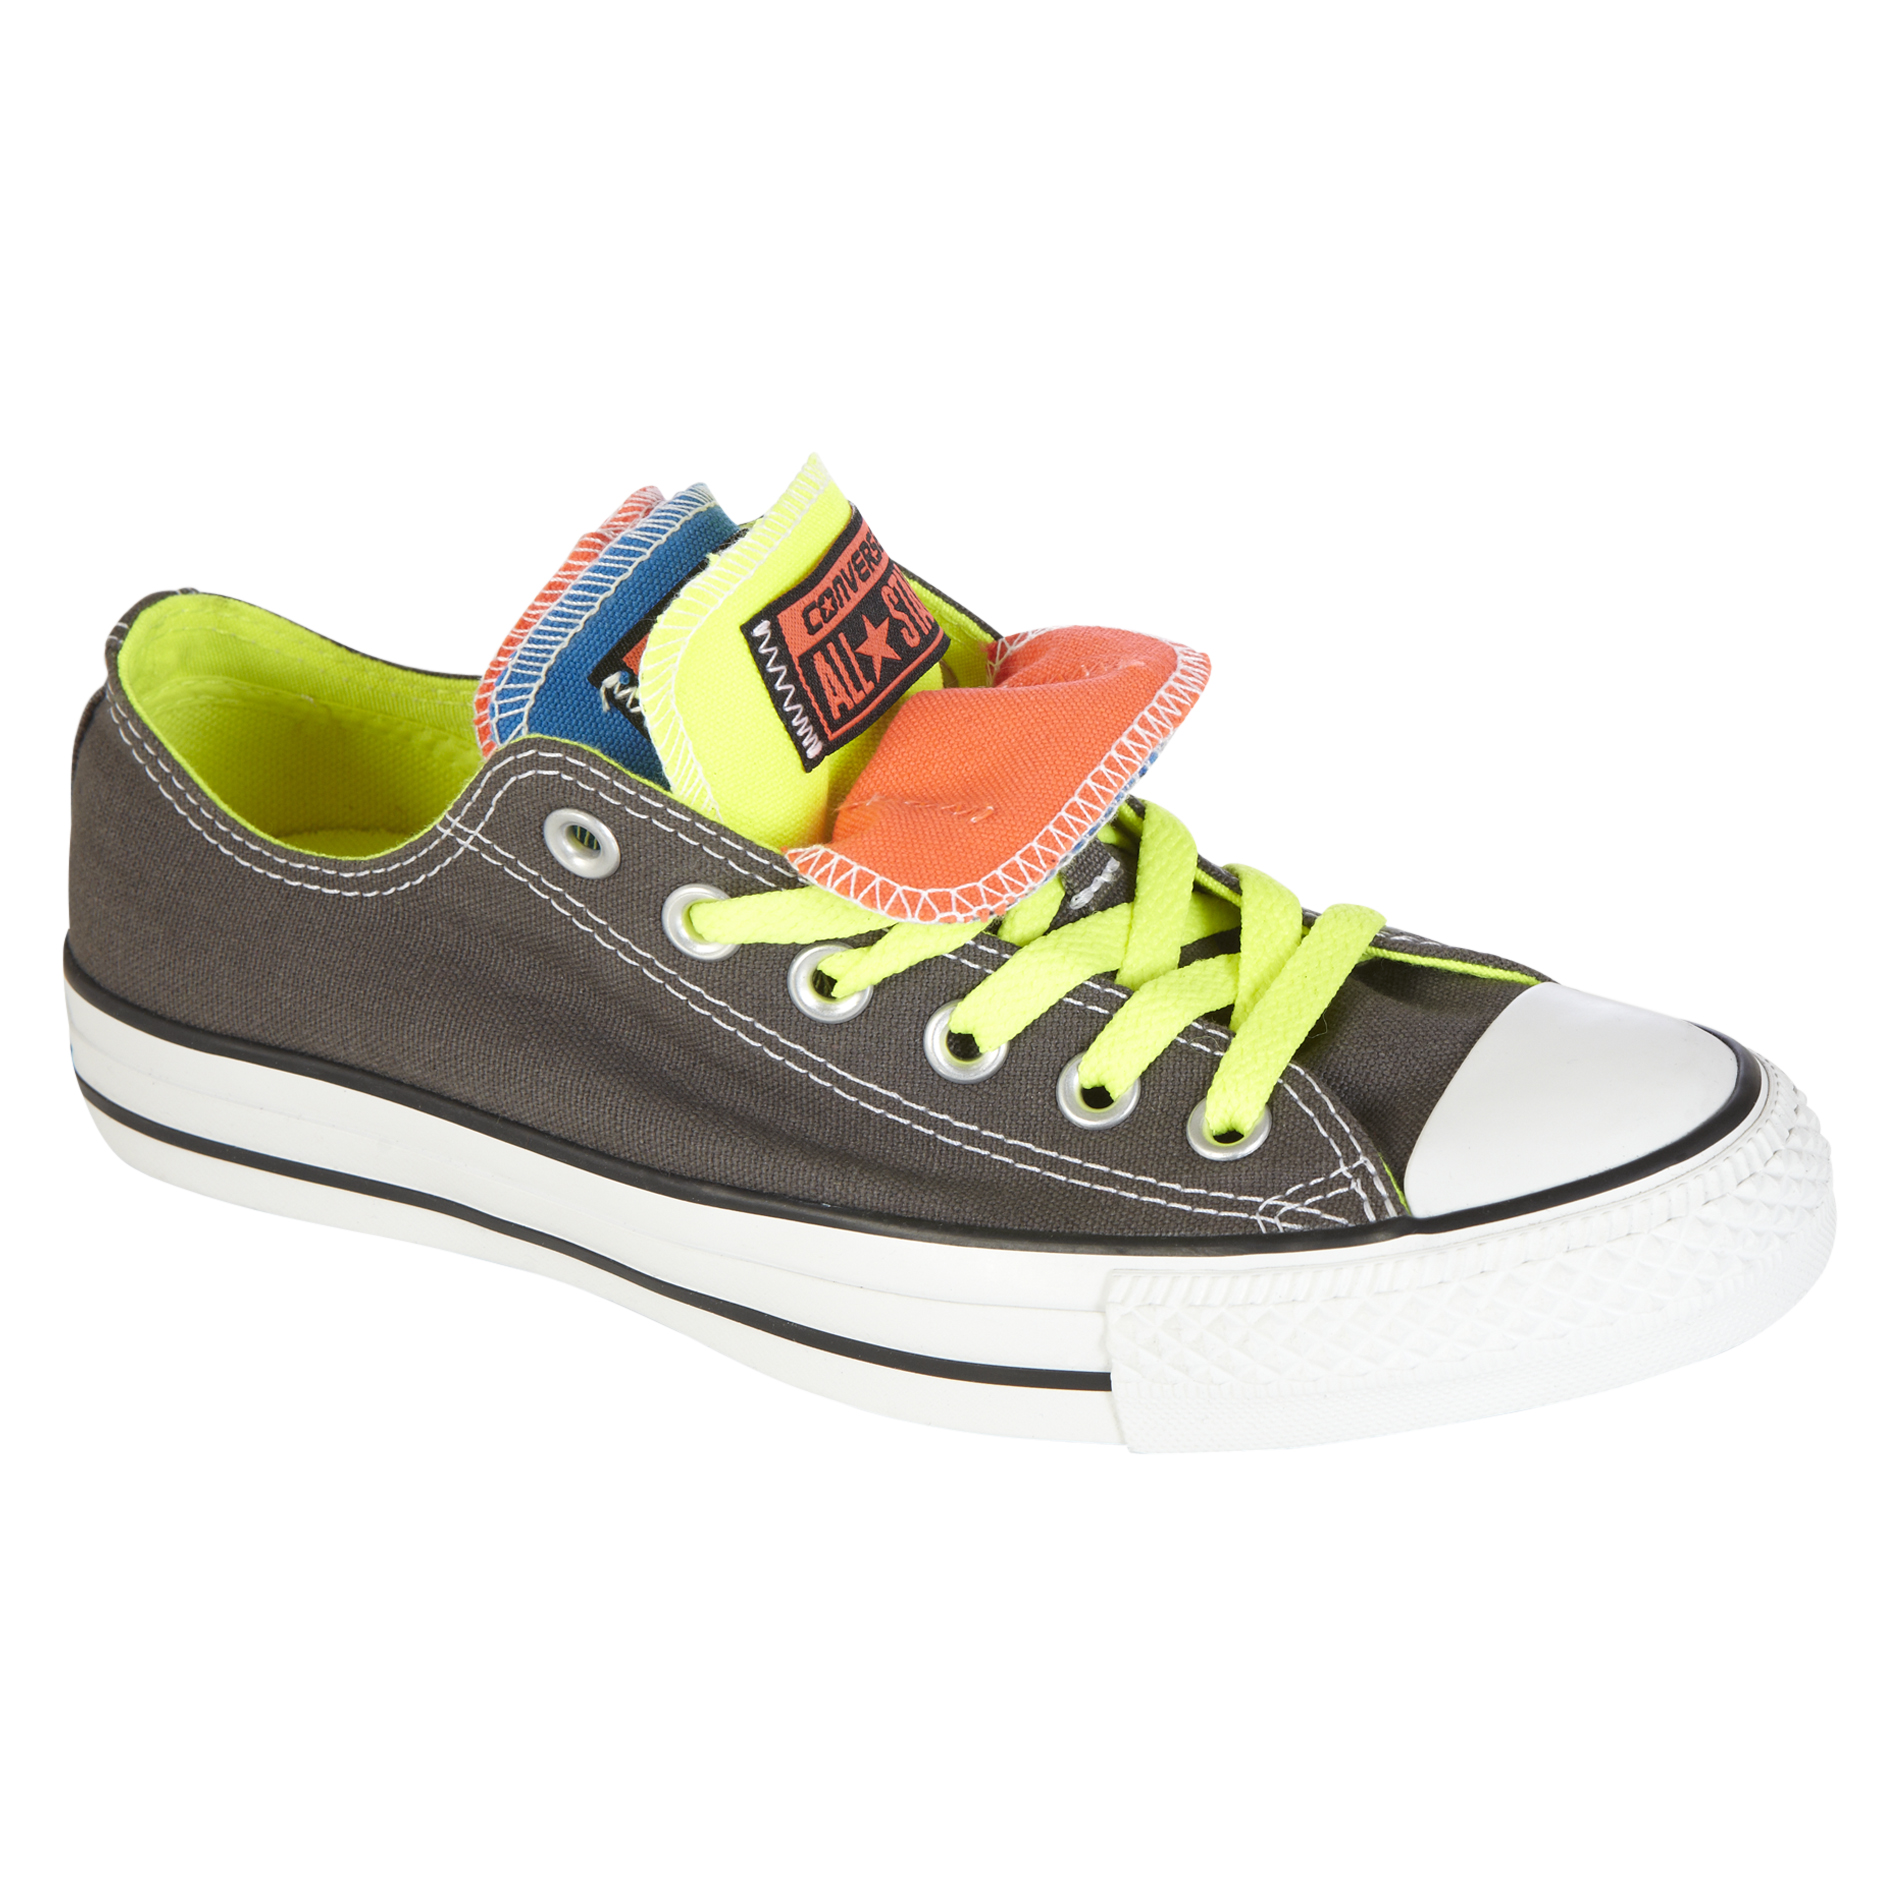 Converse Chuck Taylor All Star Women's Gray/Neon Multicolor Multi-Tongue Oxford Sneakers